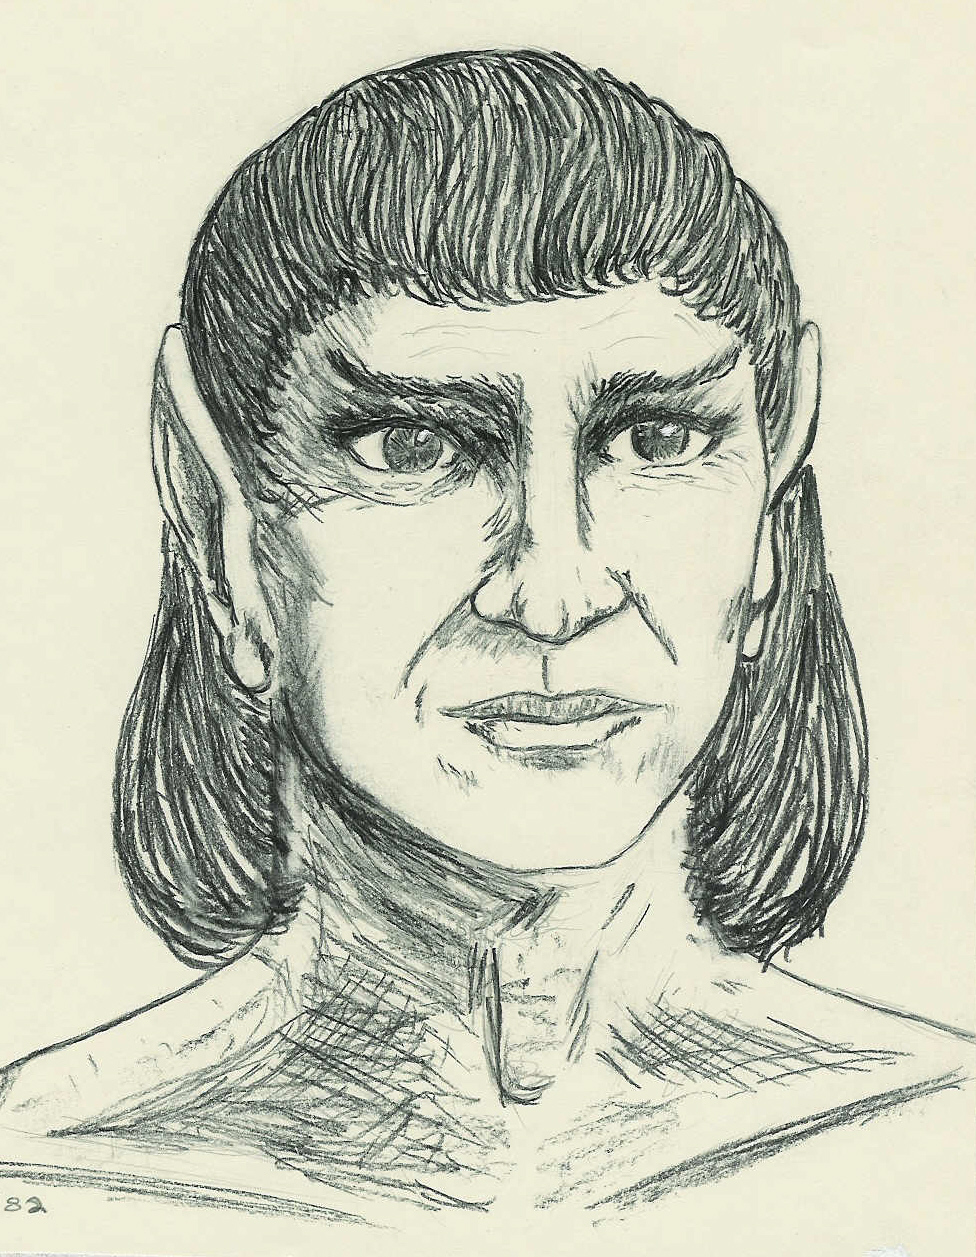 Sarek, Spock's father by morgannicgregor